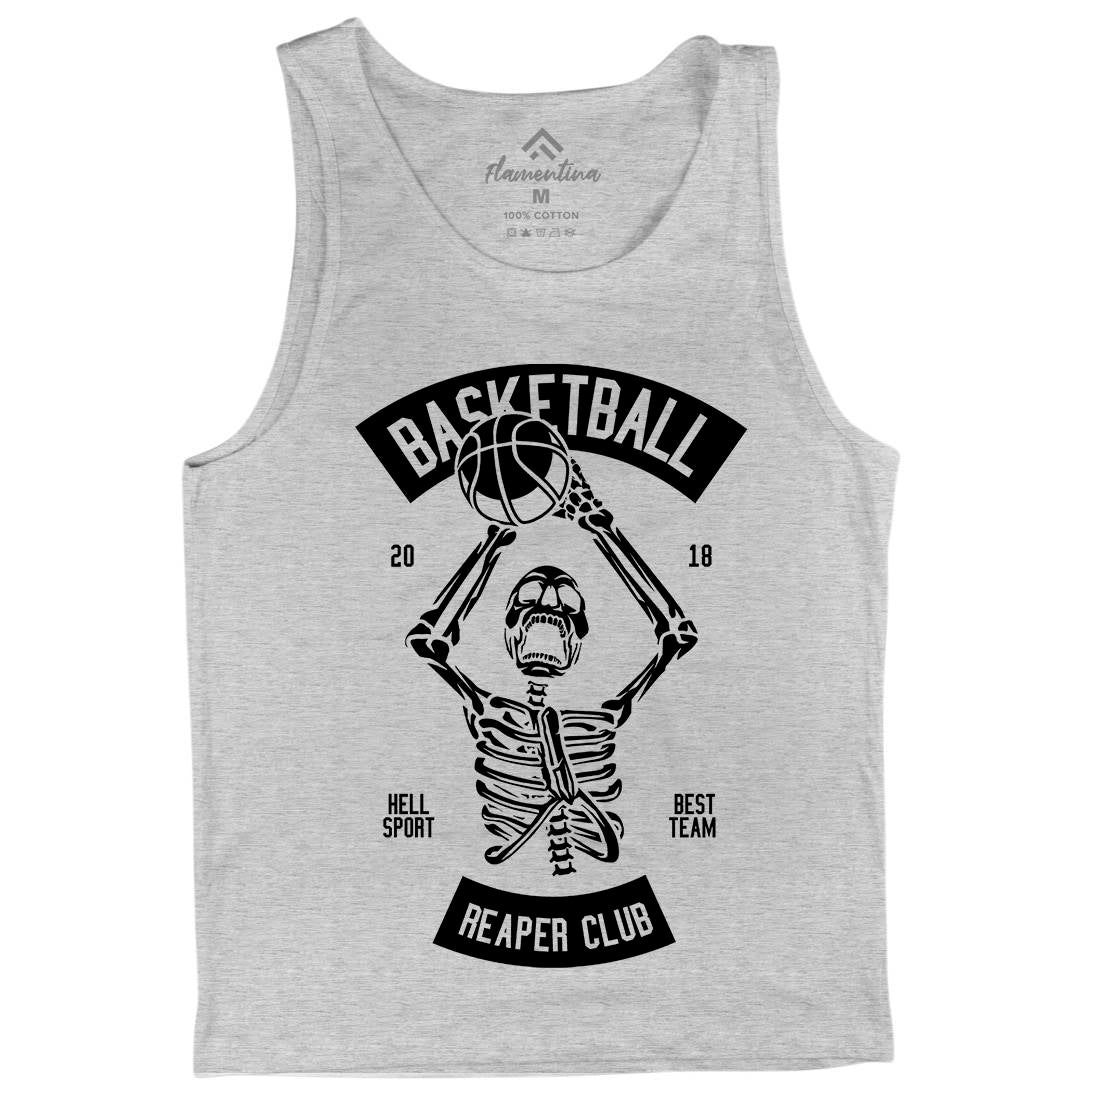 Basketball Reaper Club Mens Tank Top Vest Sport B491